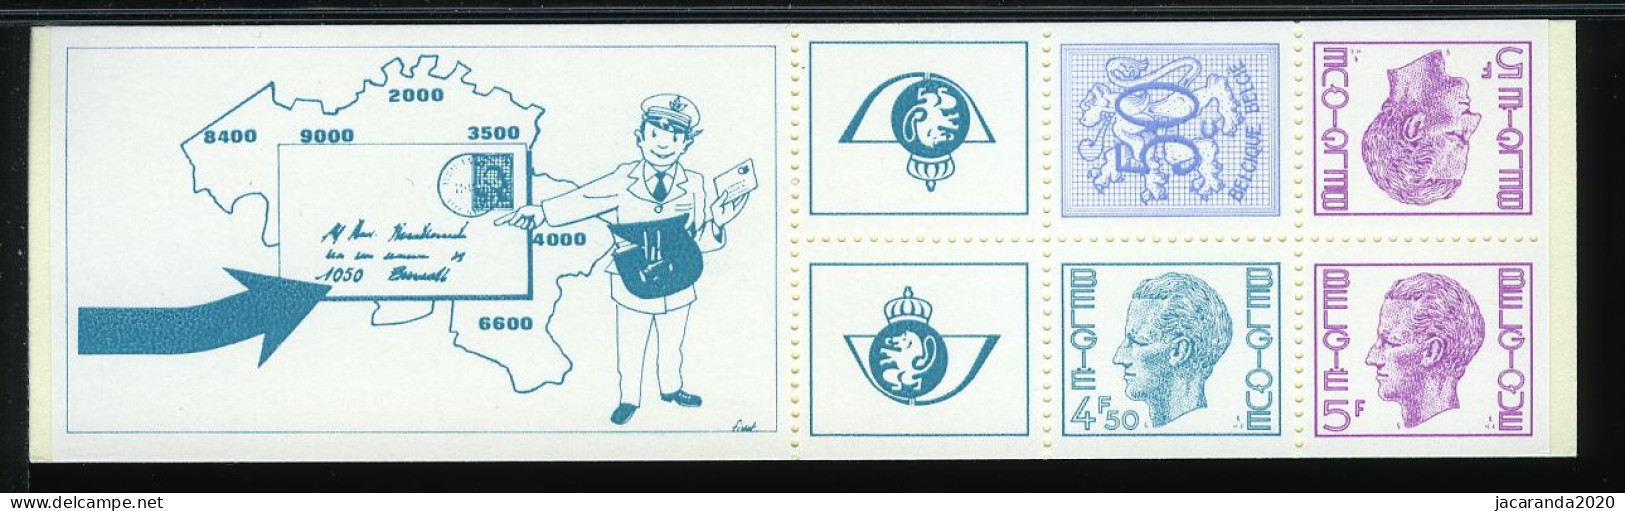 België B12 - Koning Boudewijn - Cijfer Op Heraldieke Leeuw - Roi Baudouin - Chiffre Sur Lion Héraldique - 1975 - 1953-2006 Modernes [B]